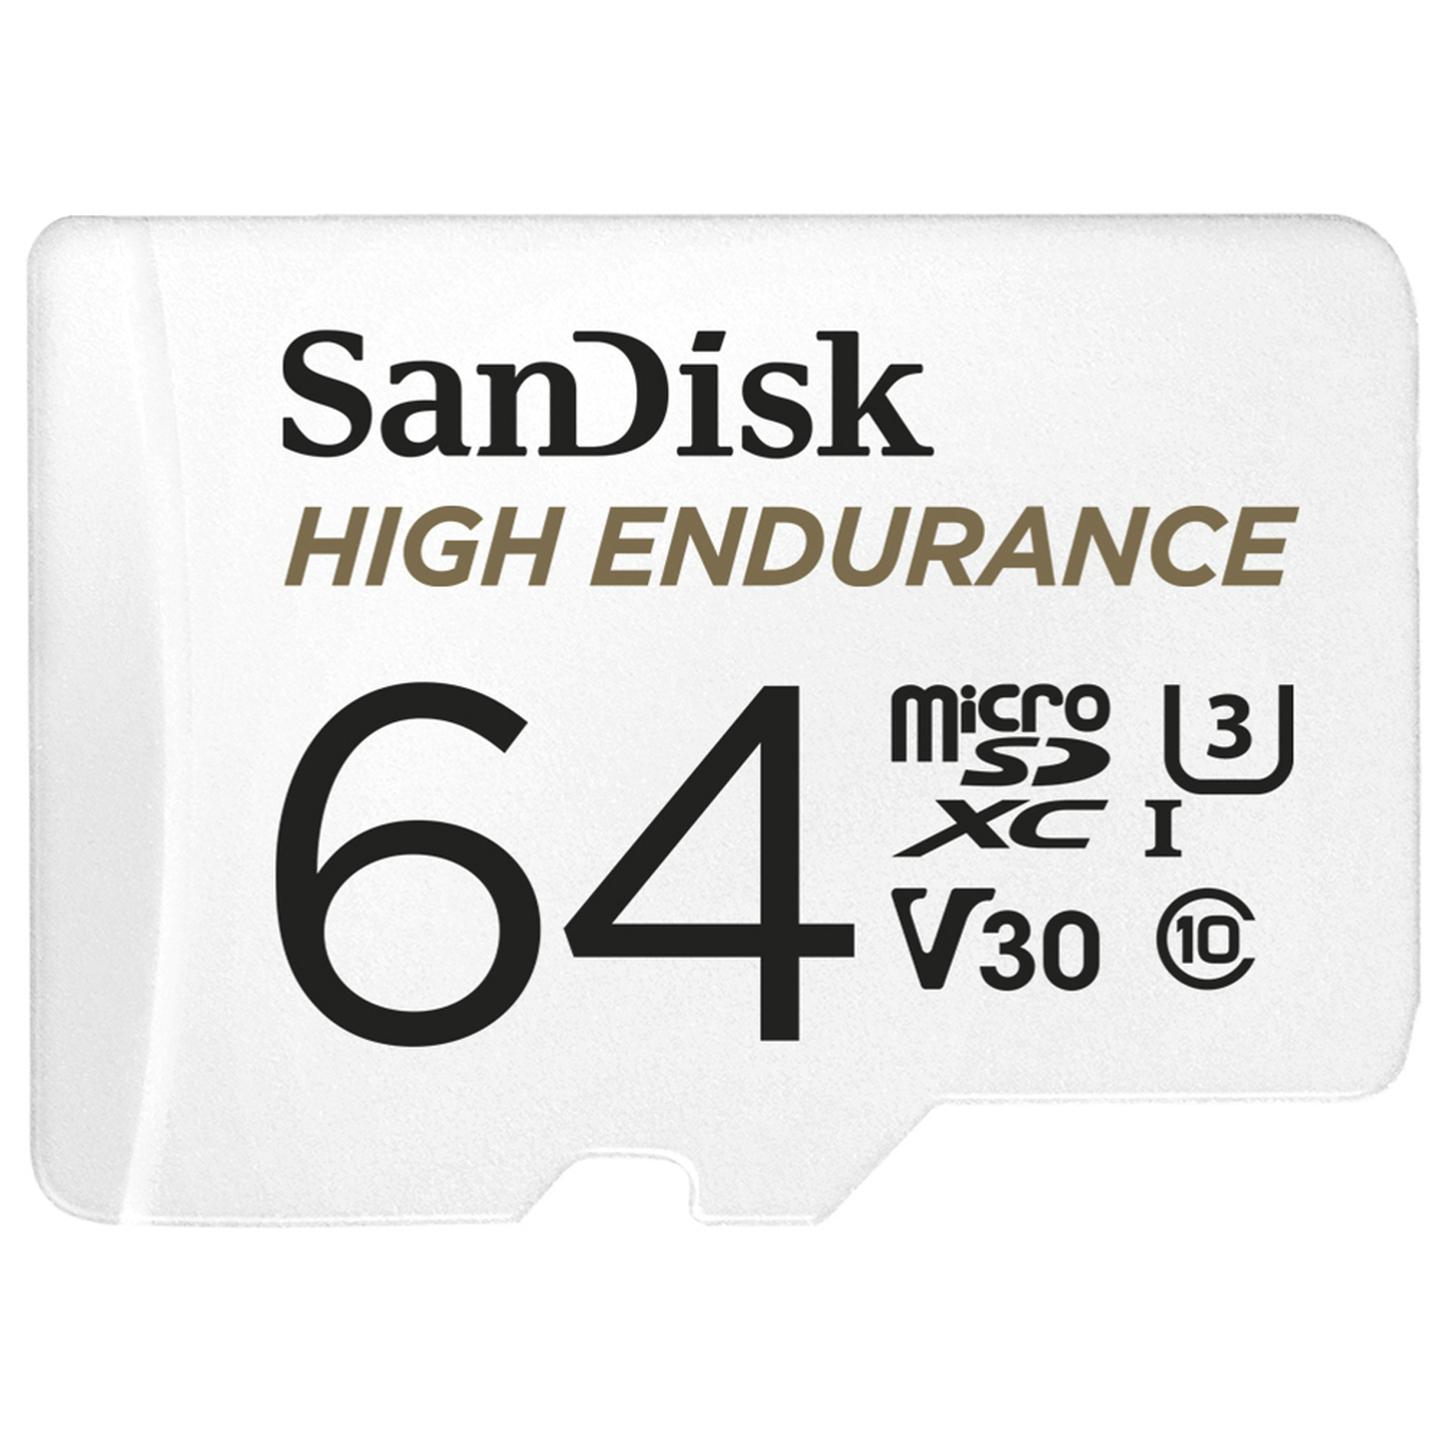 Sandisk 64GB High Endurance microSDXC Class 10 Reads 100MB/S Writes 40MB/S 